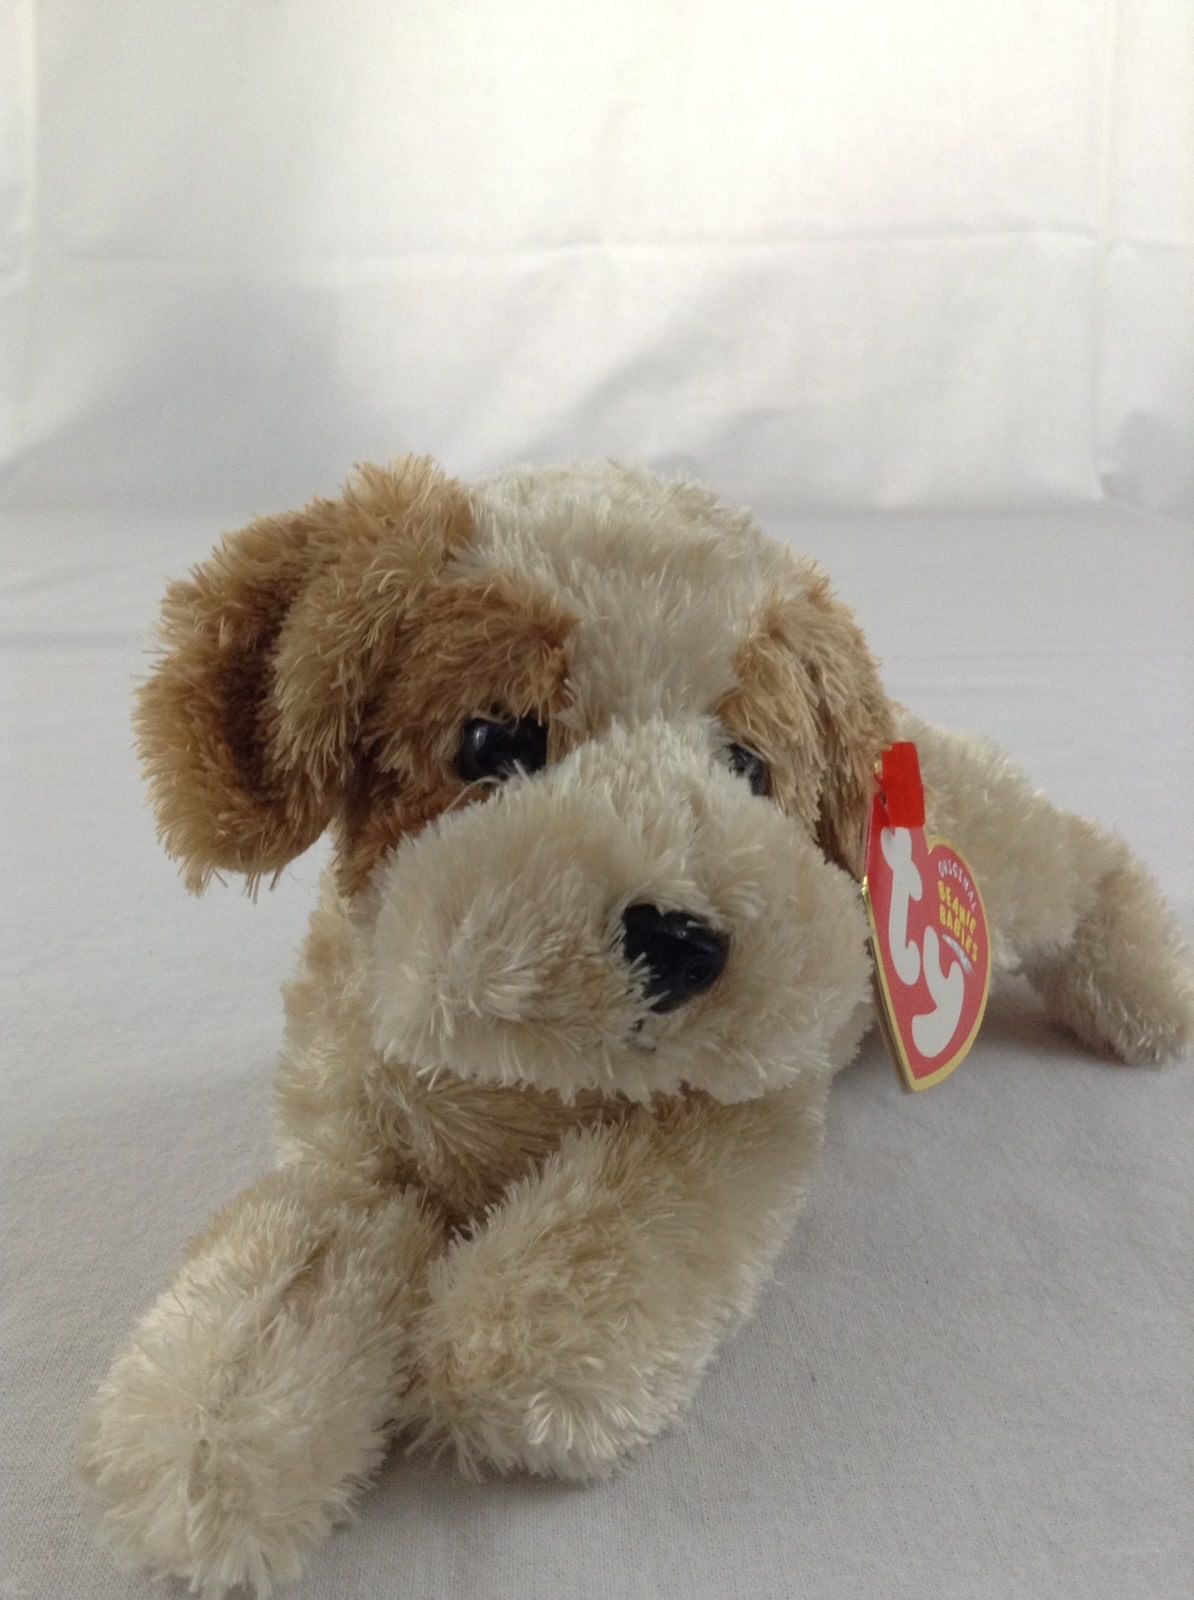 2004 Ty Beanie Baby Banjo Brown Tan Dog Stuffed Plush Animal Toy - Retired